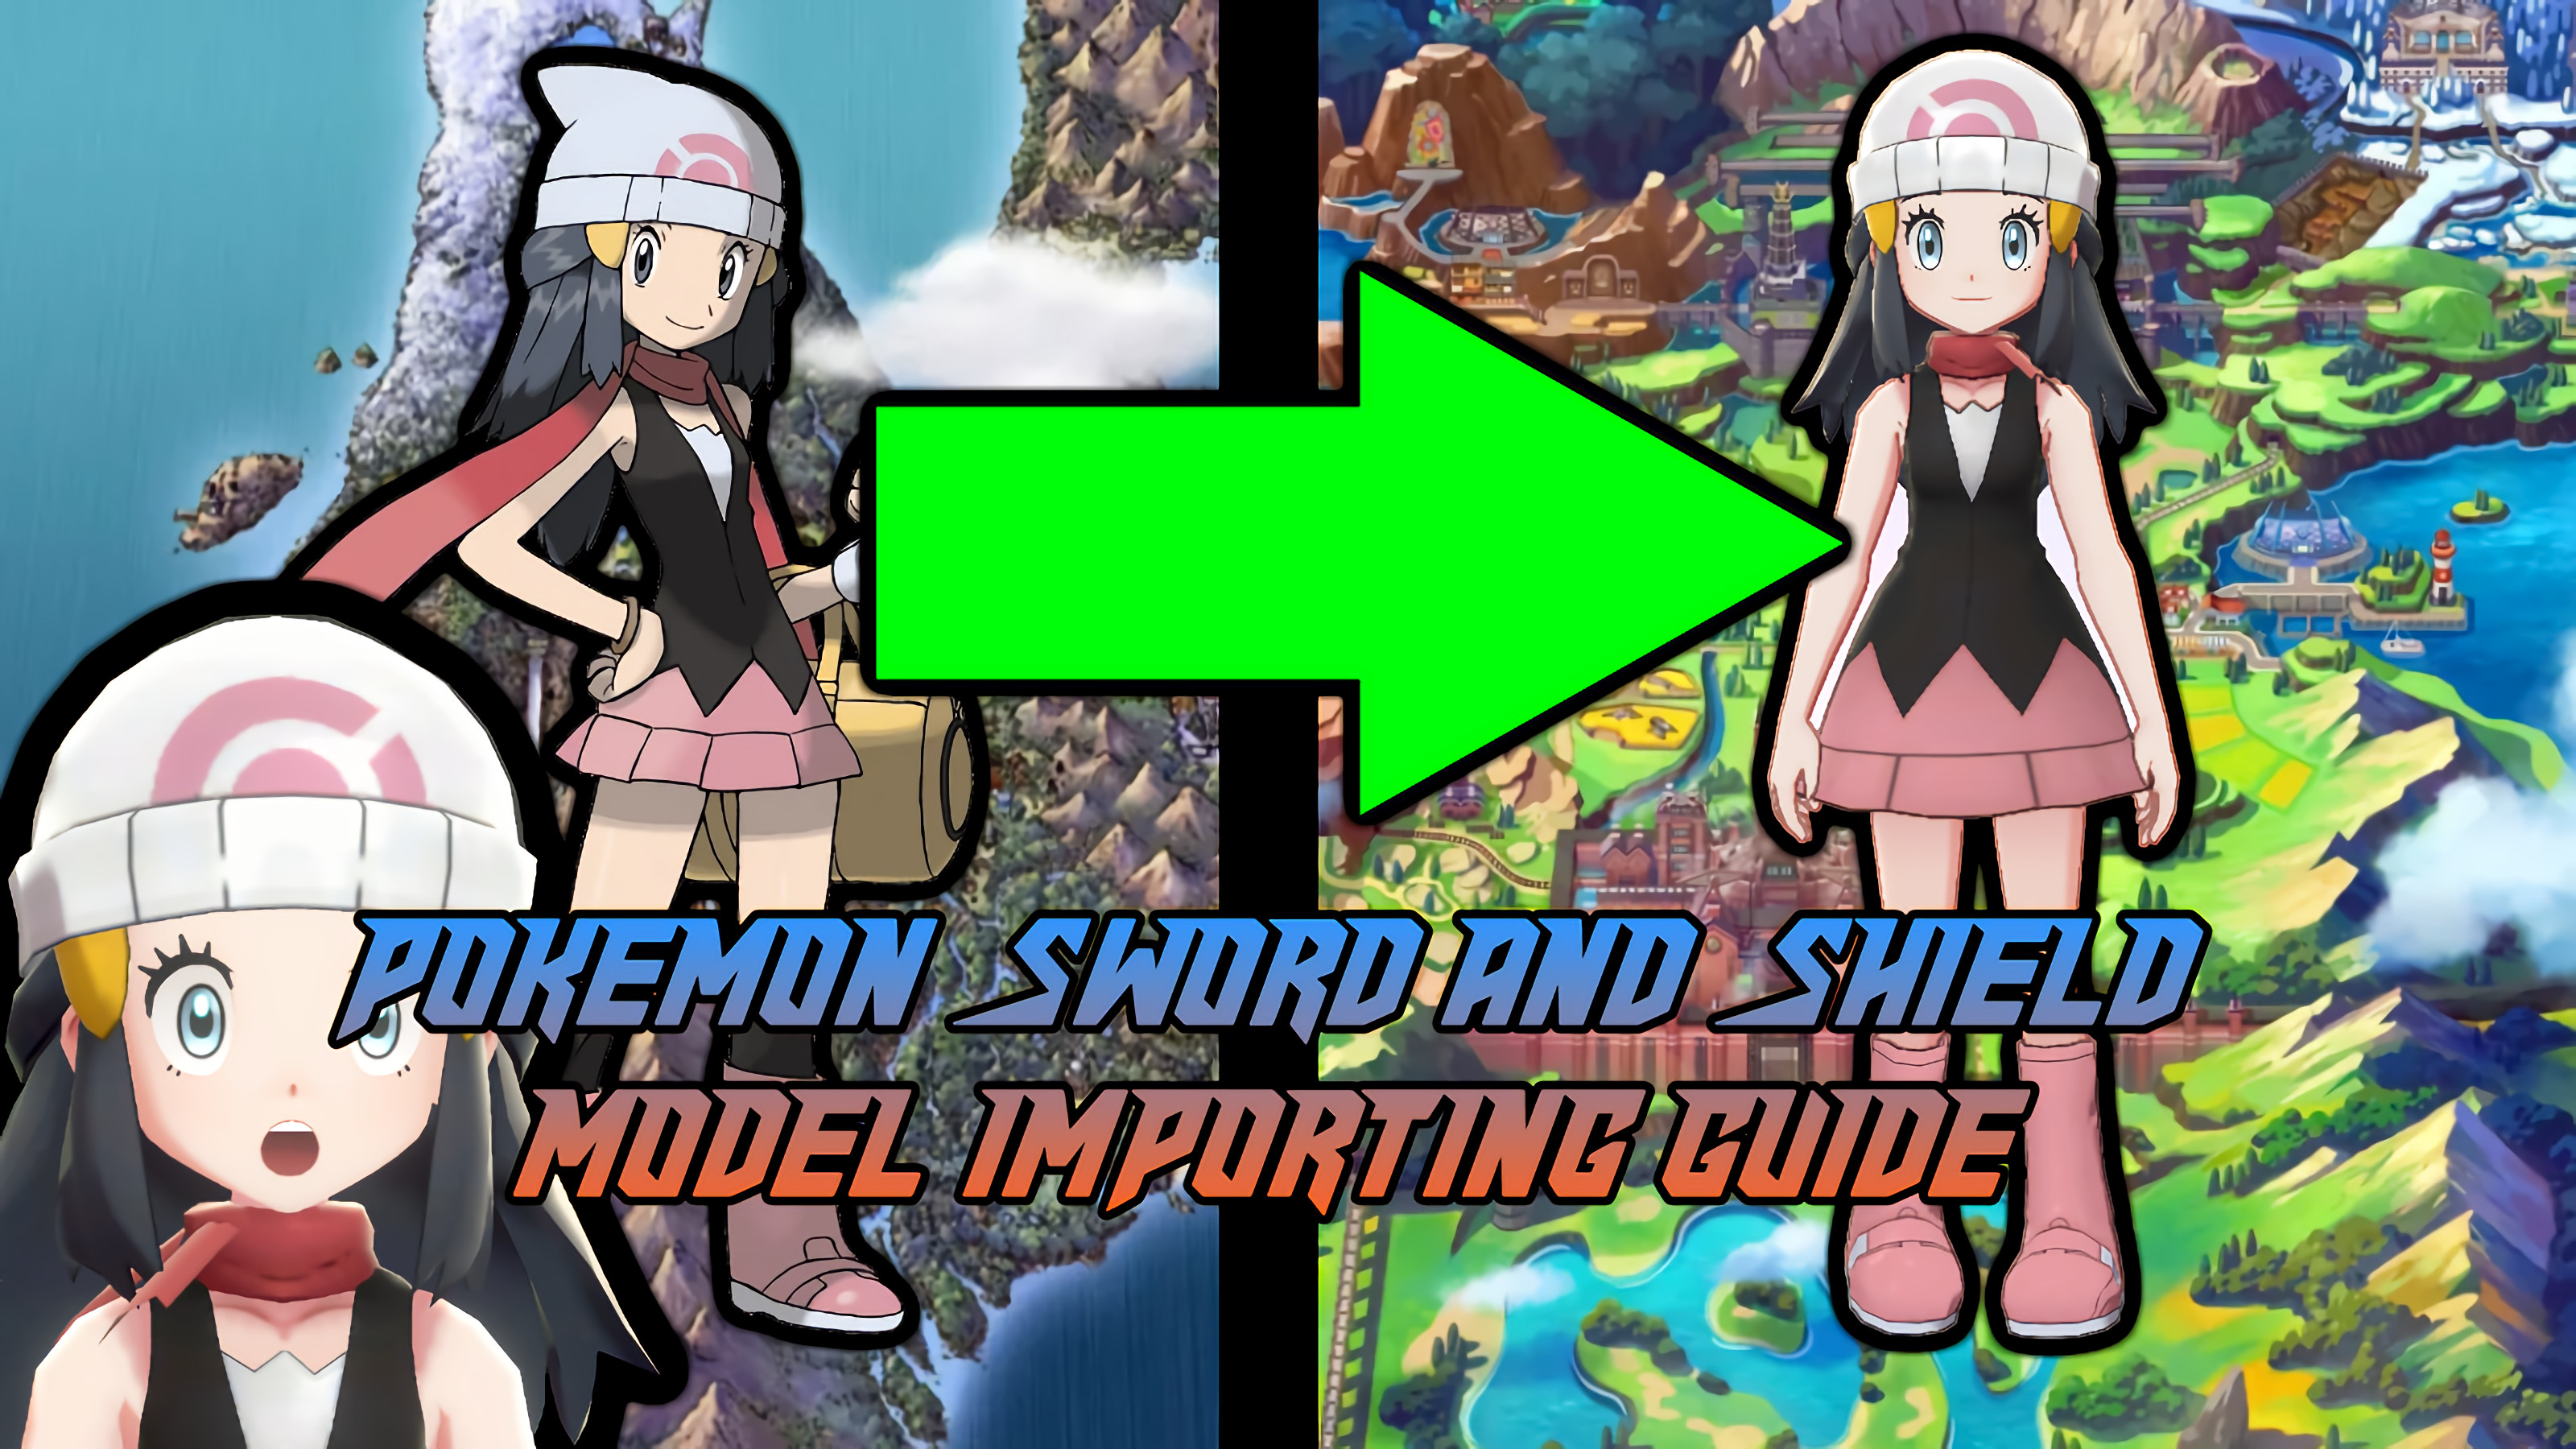 Blender] How To Import Over [Pokemon Sword Shield] [Tutorials]